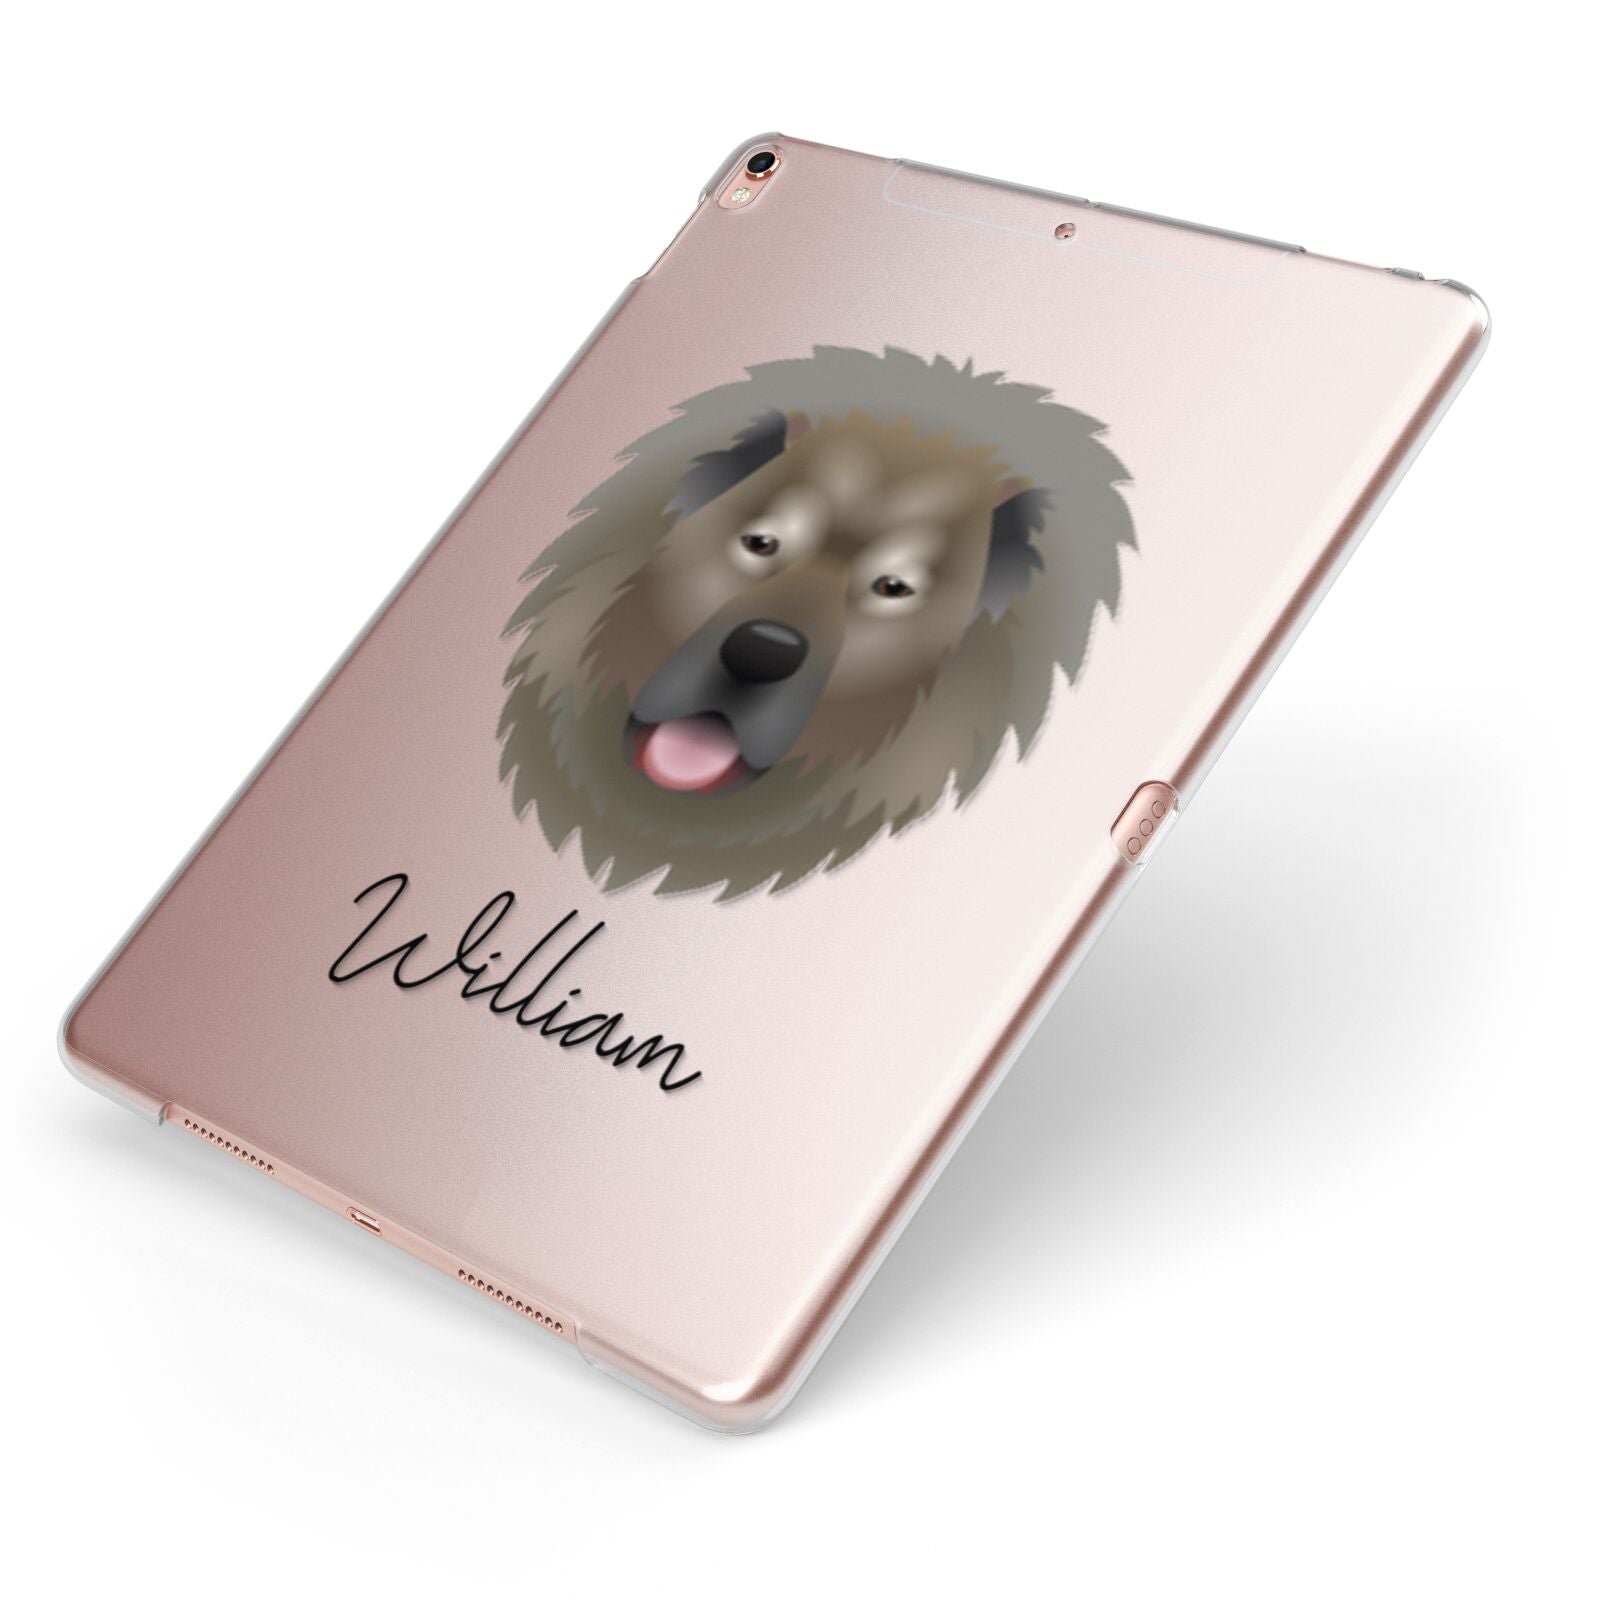 Causasian Shepherd Personalised Apple iPad Case on Rose Gold iPad Side View